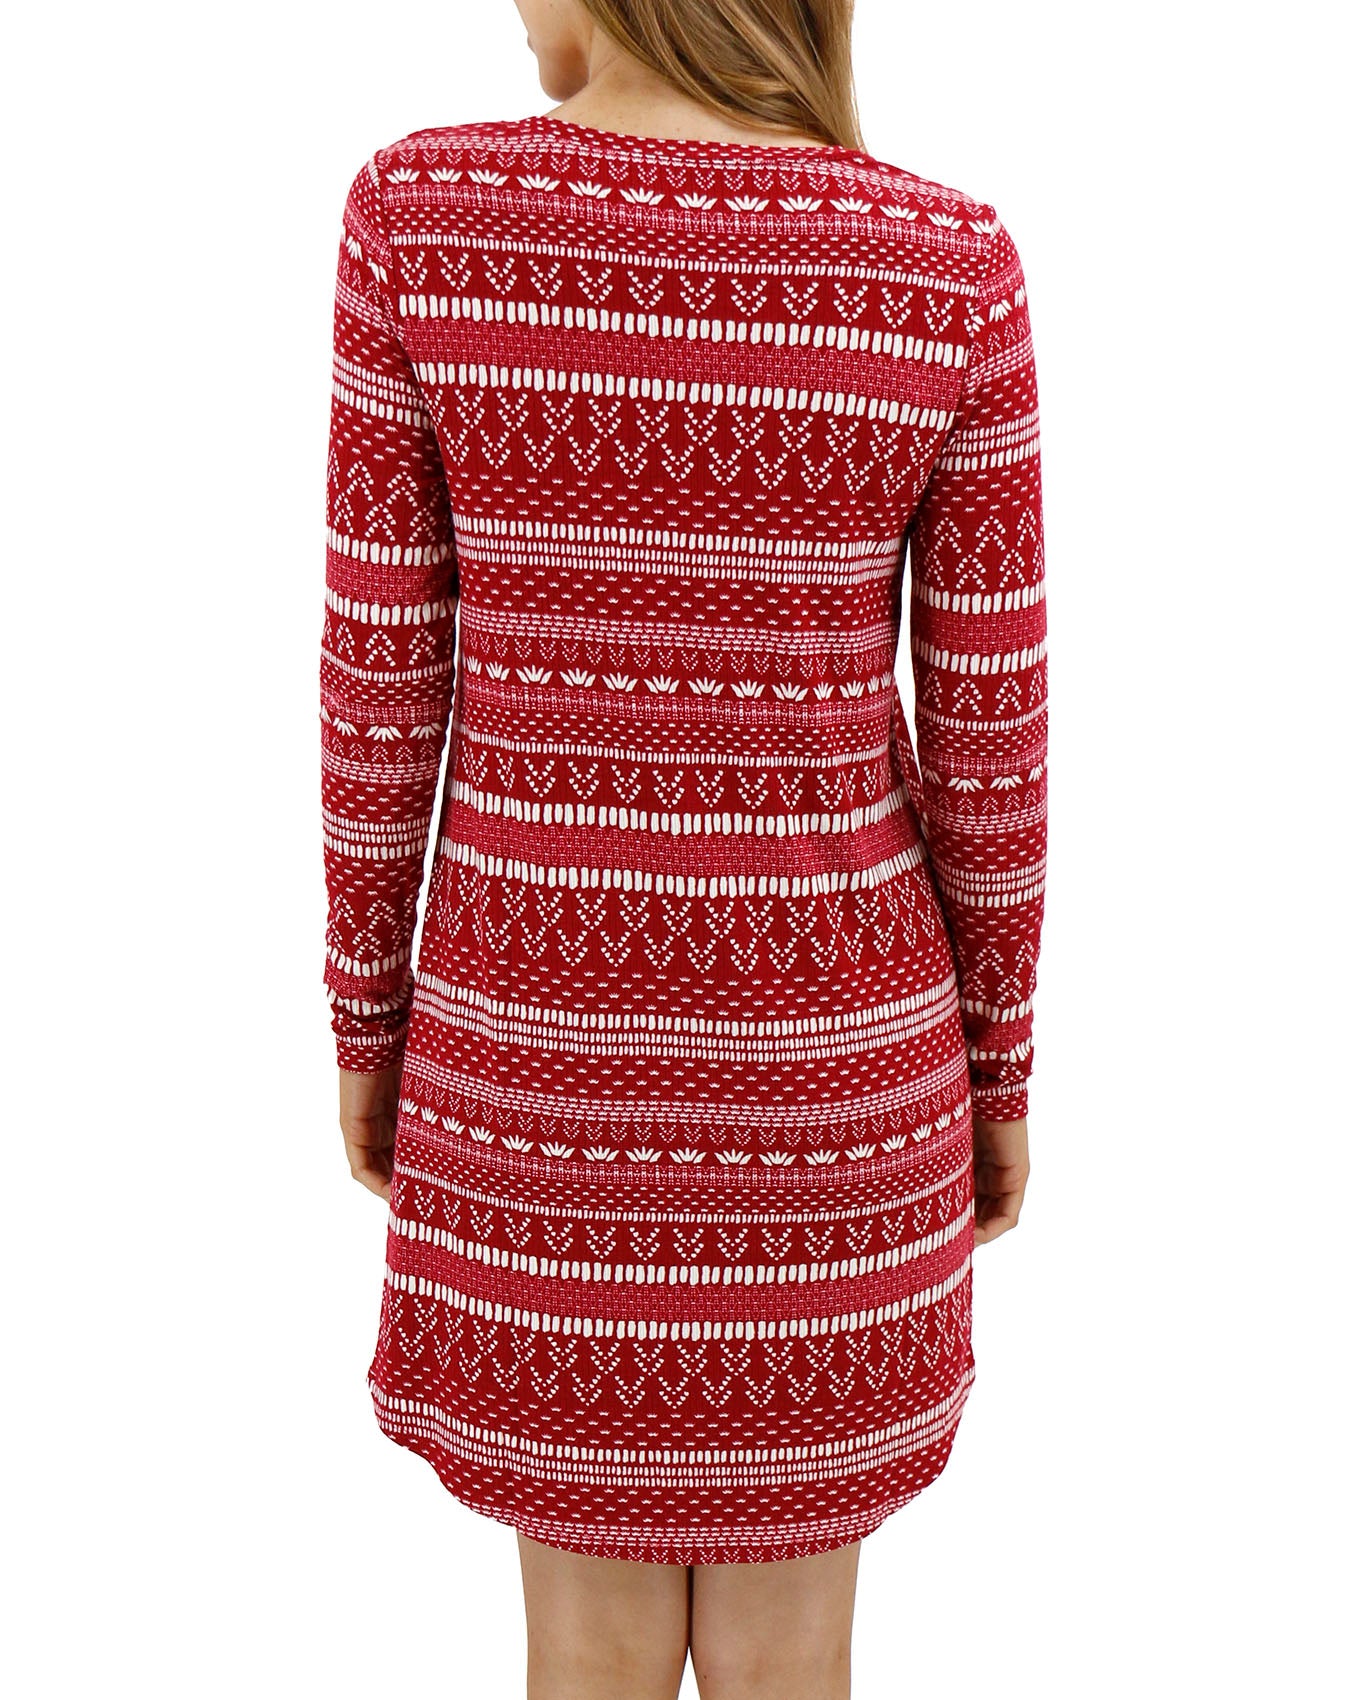 Back view stock shot of Red/White Intarsia Holiday Sleep Shirt Dress